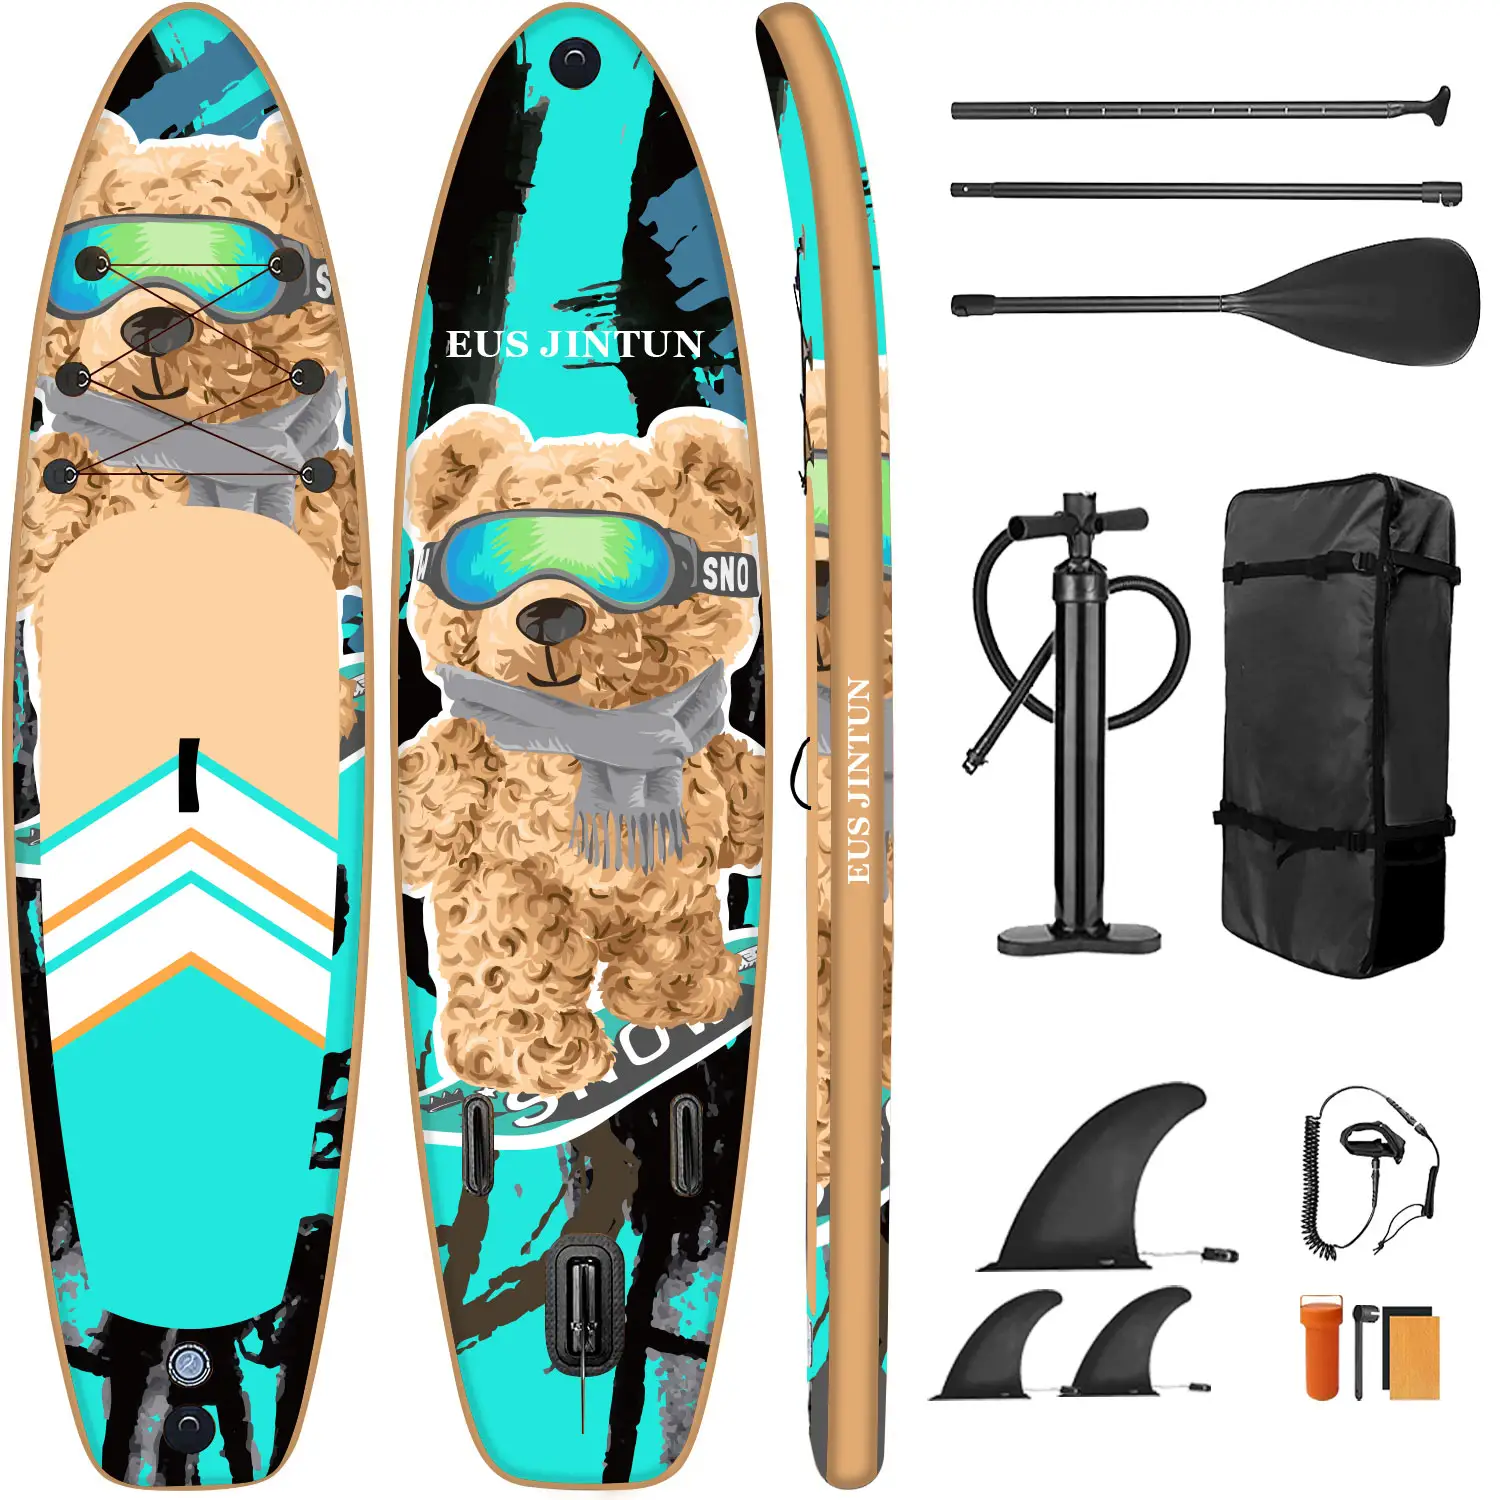 OEM 도매 SUP 저렴한 서핑 드롭 스티치 멋진 isup 수액 낚시 풍선 스탠드 업 패들 보드